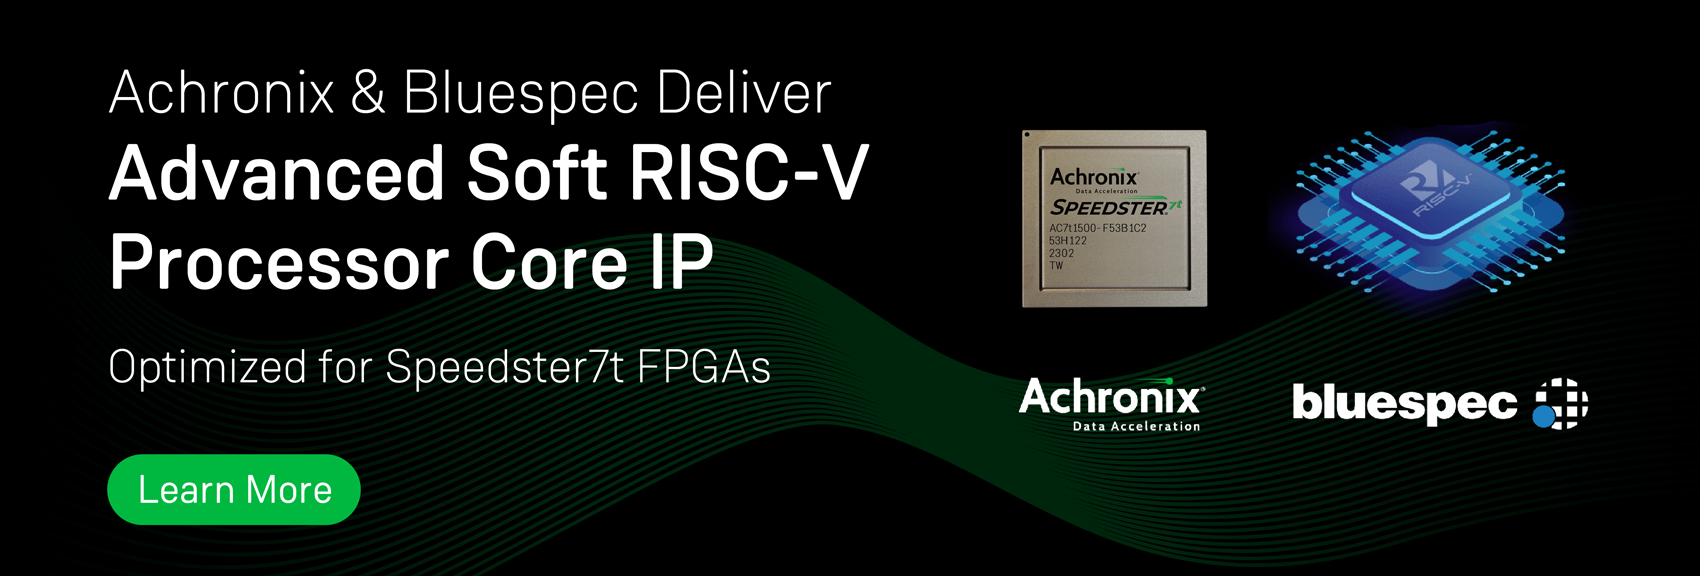 Advanced Soft RISC-V Processor Core IP